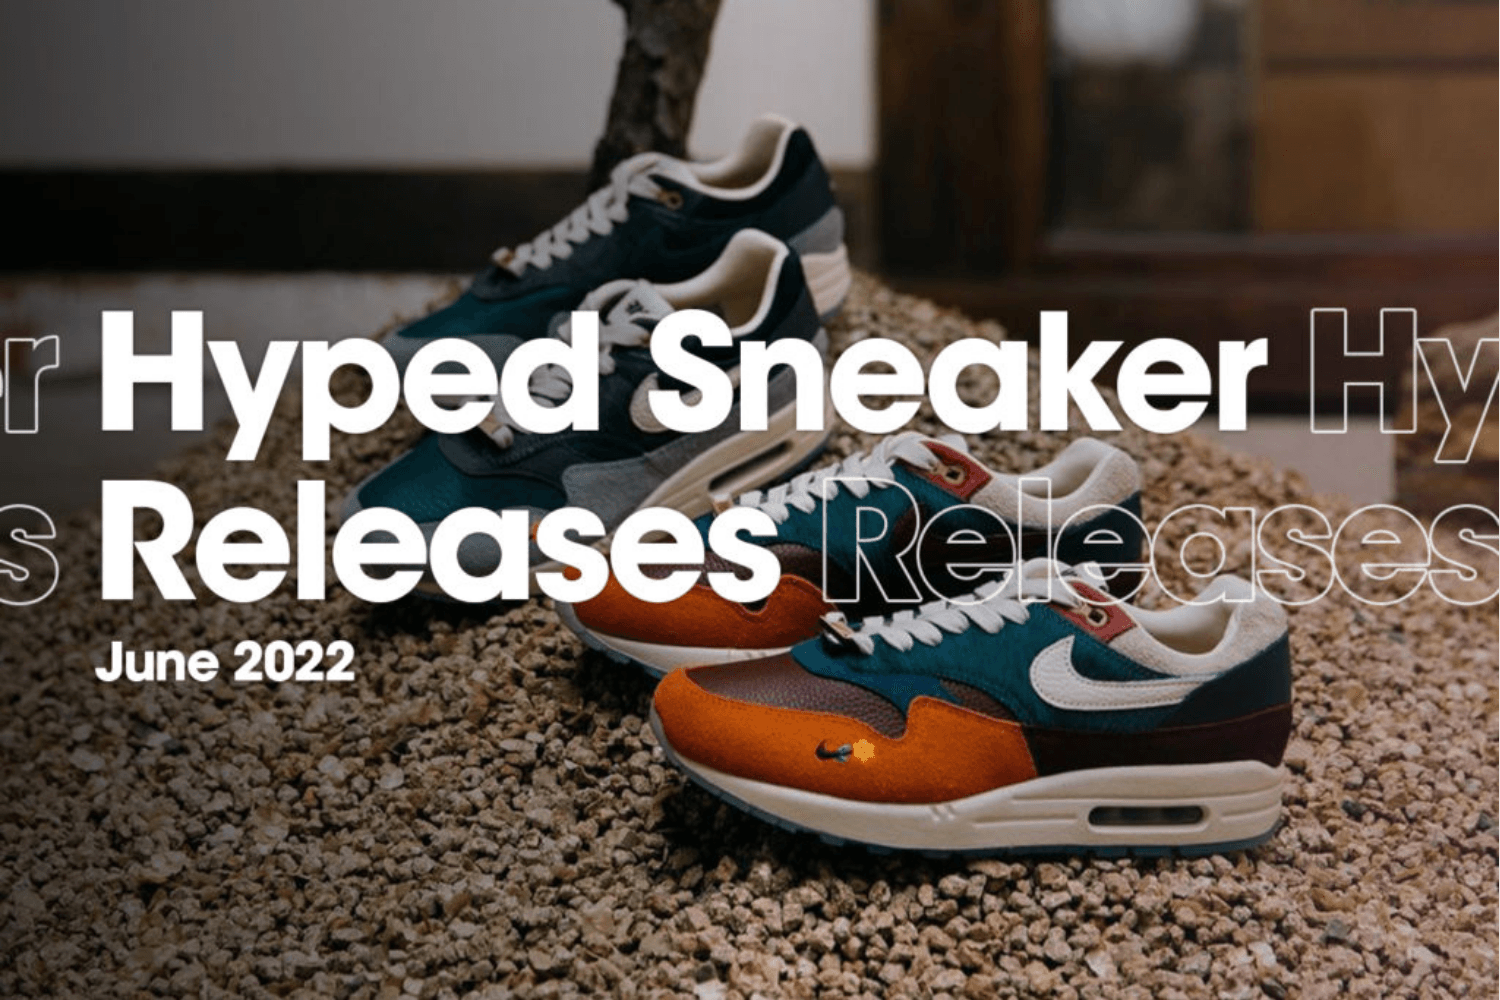 Die Hyped Sneaker Releases von Juni 2022 im Überblick